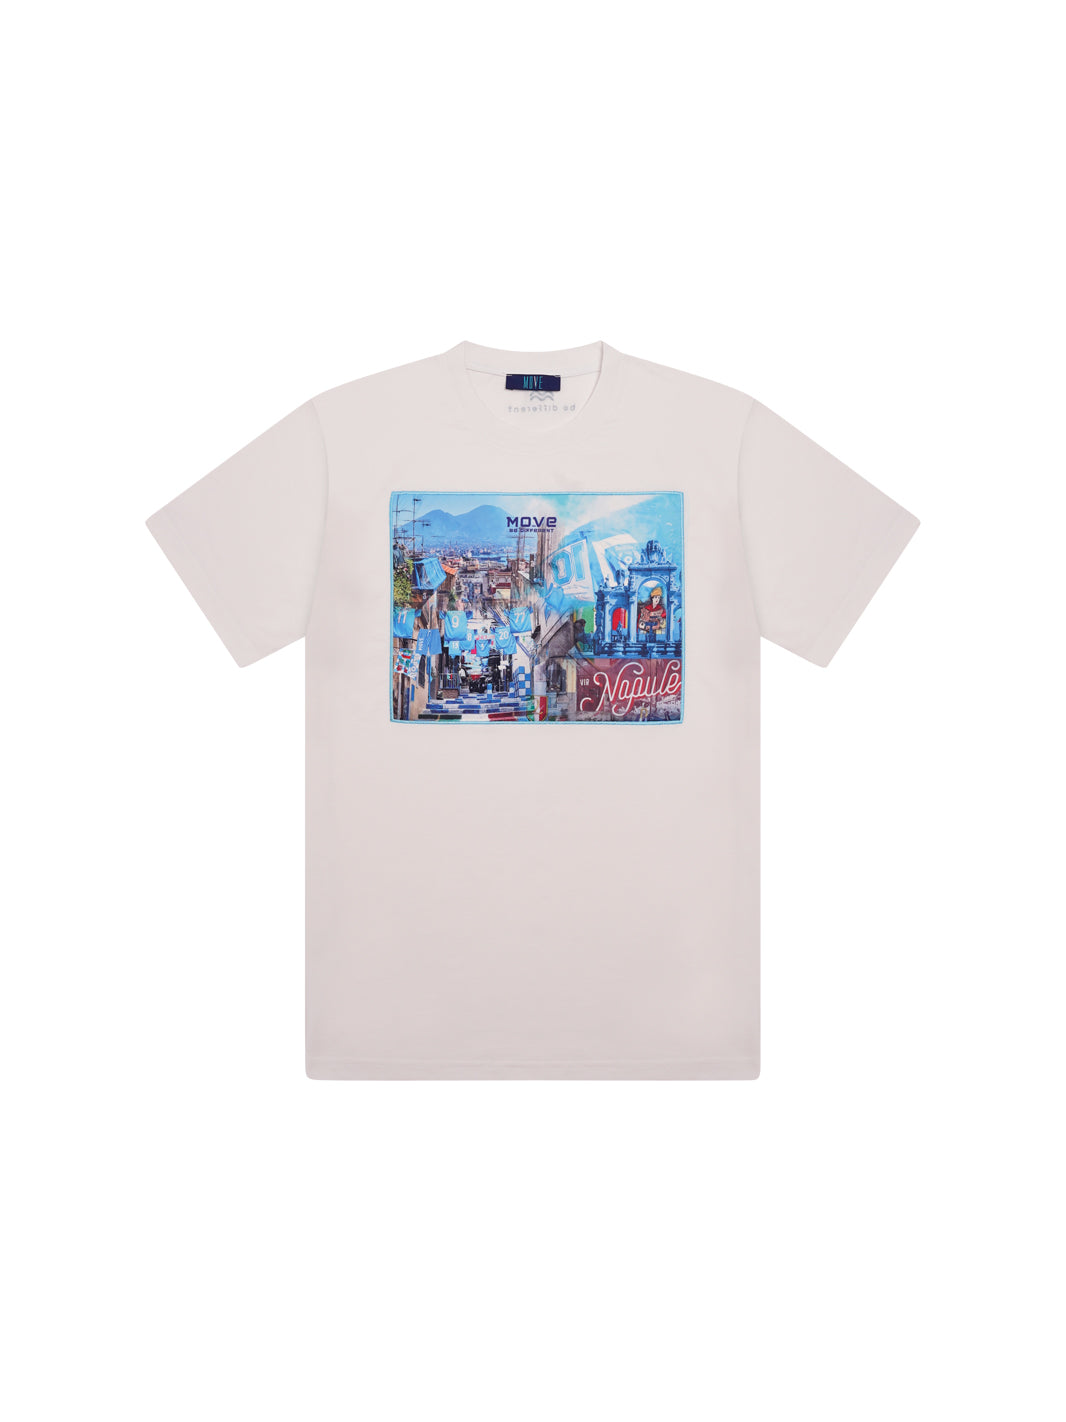 TS Print Boy Vicoli - T-Shirt - Move Beachwear